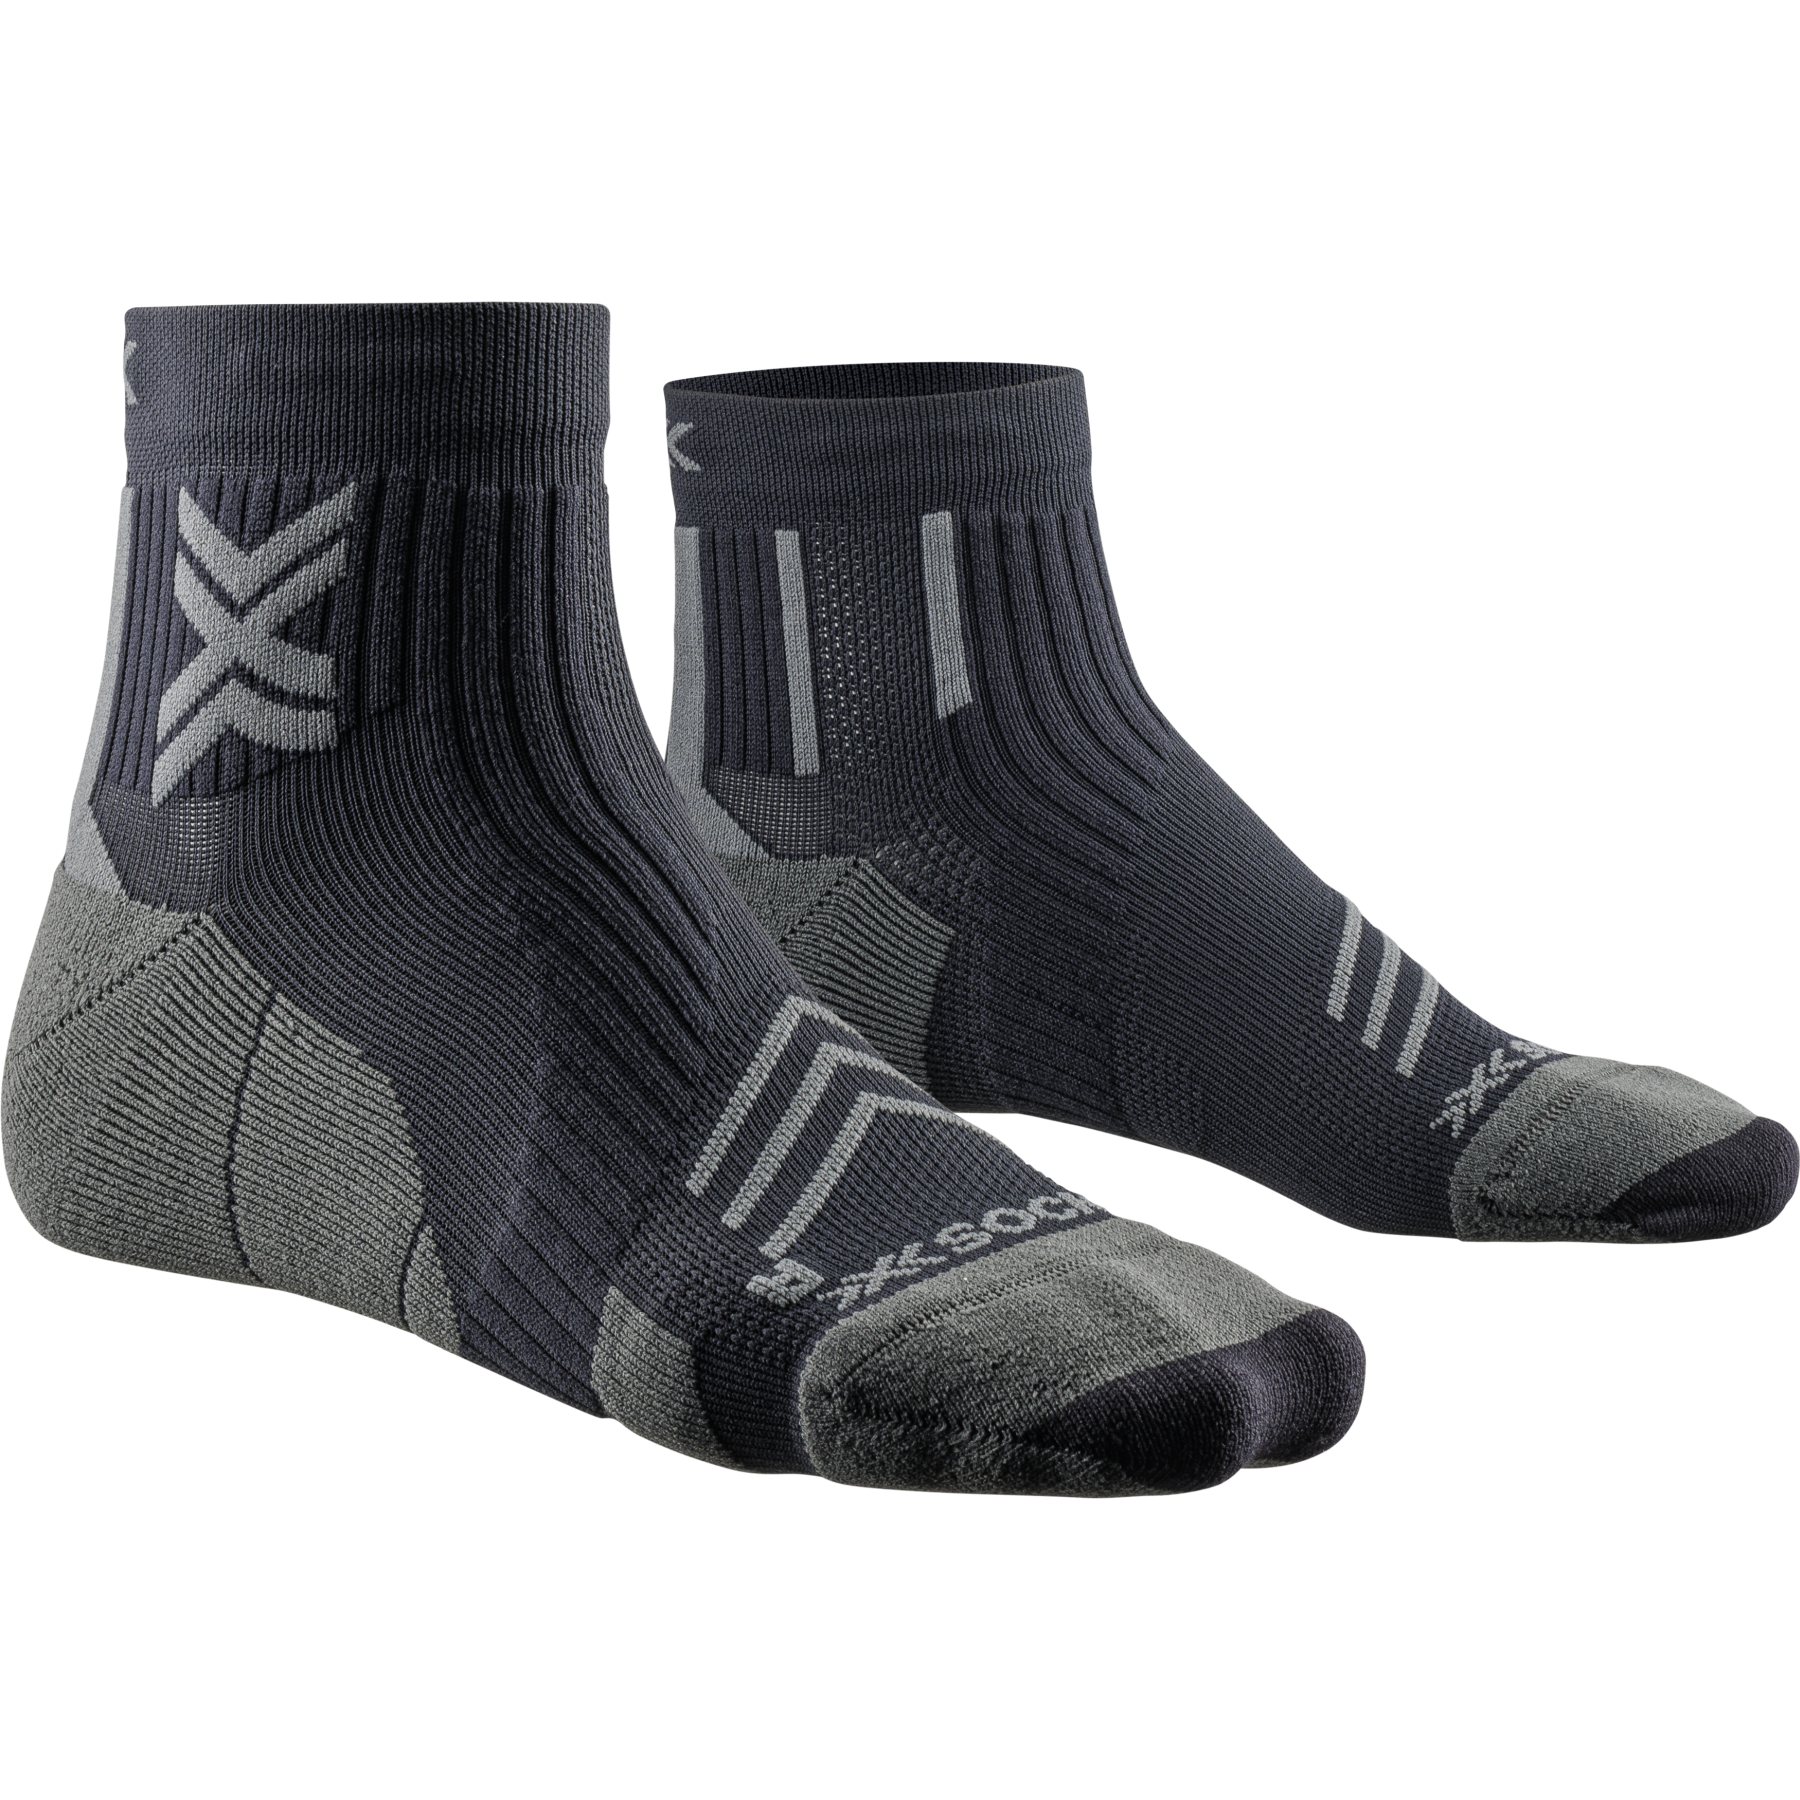 Bild von X-Socks Run Expert Ankle Socken - black/charcoal